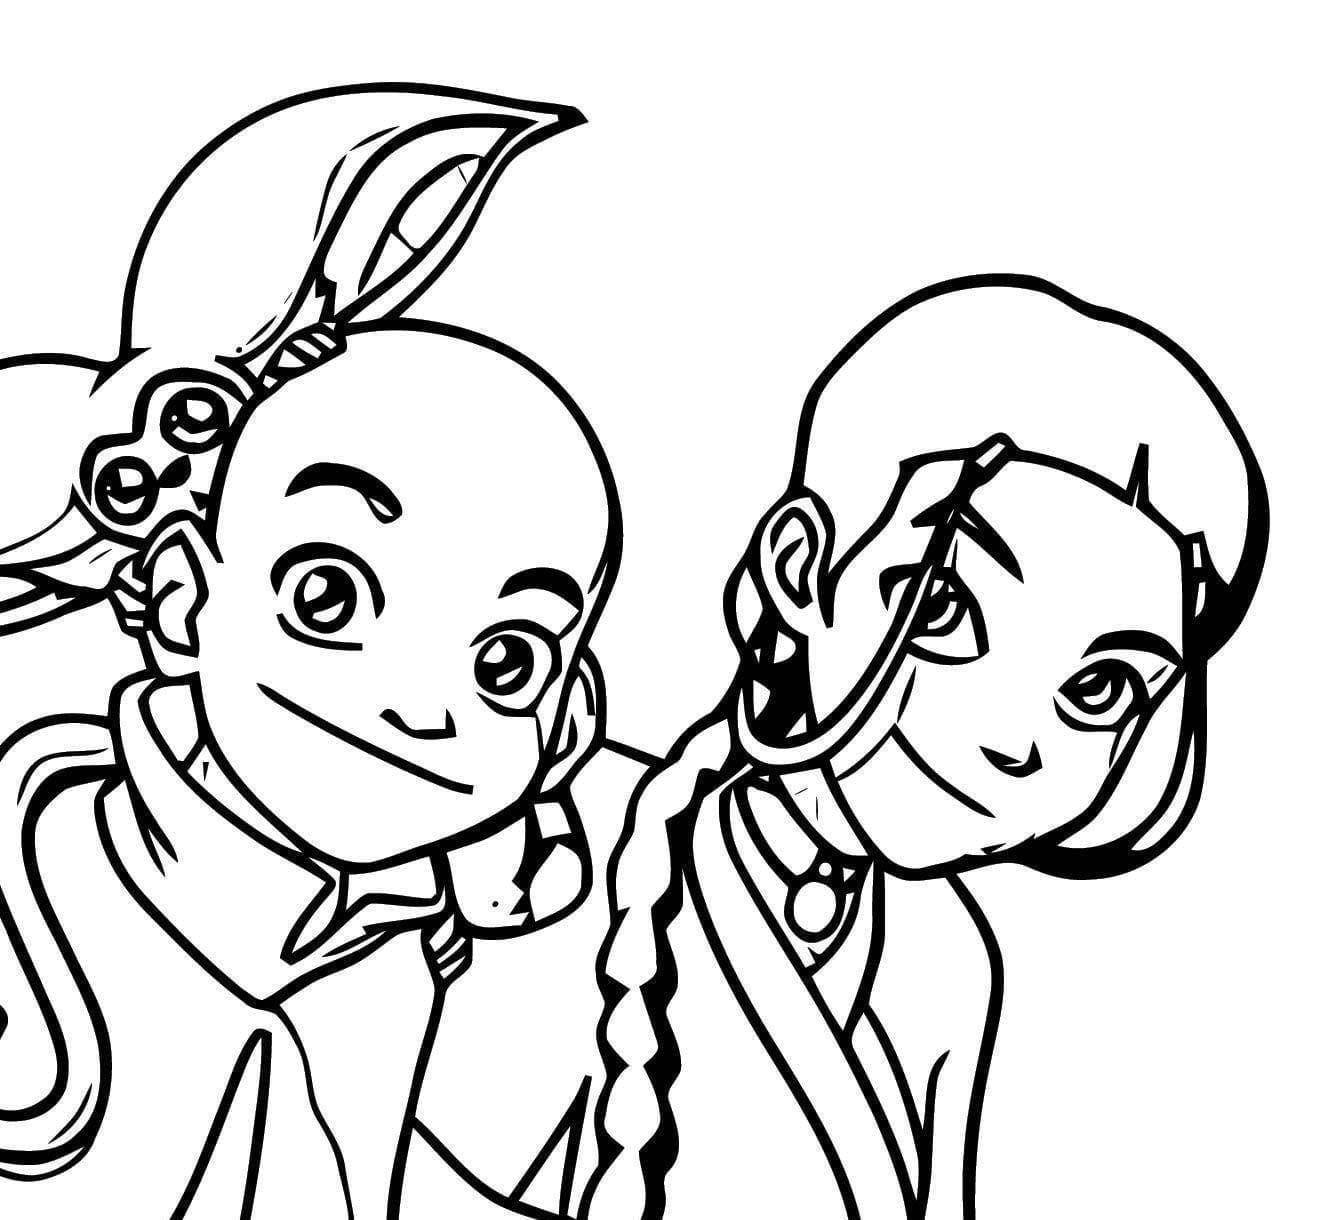 Coloriage Aang, Momo et Katara